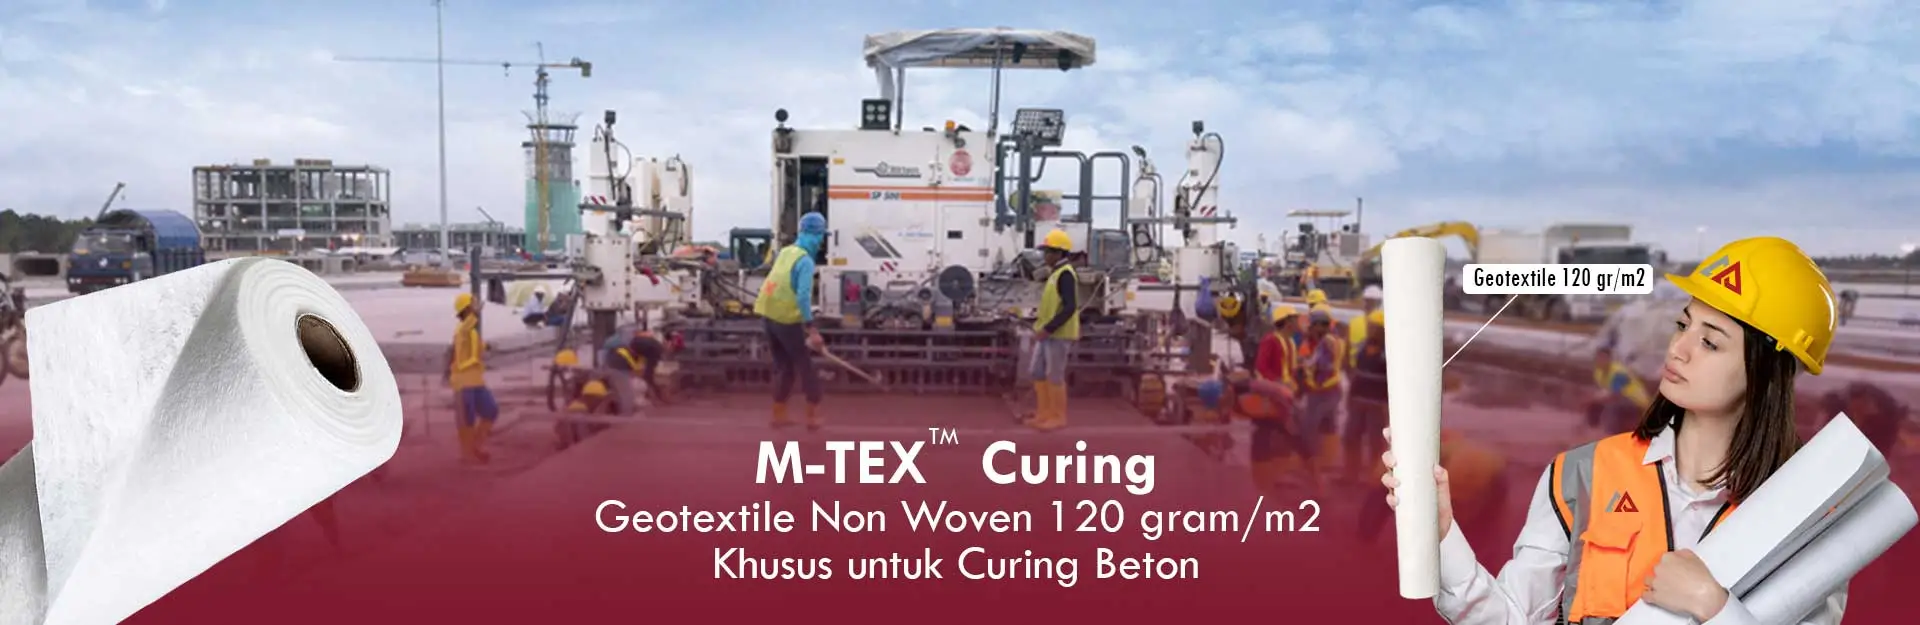 Geotextile untuk Curing Beton M-TEX™ Curing